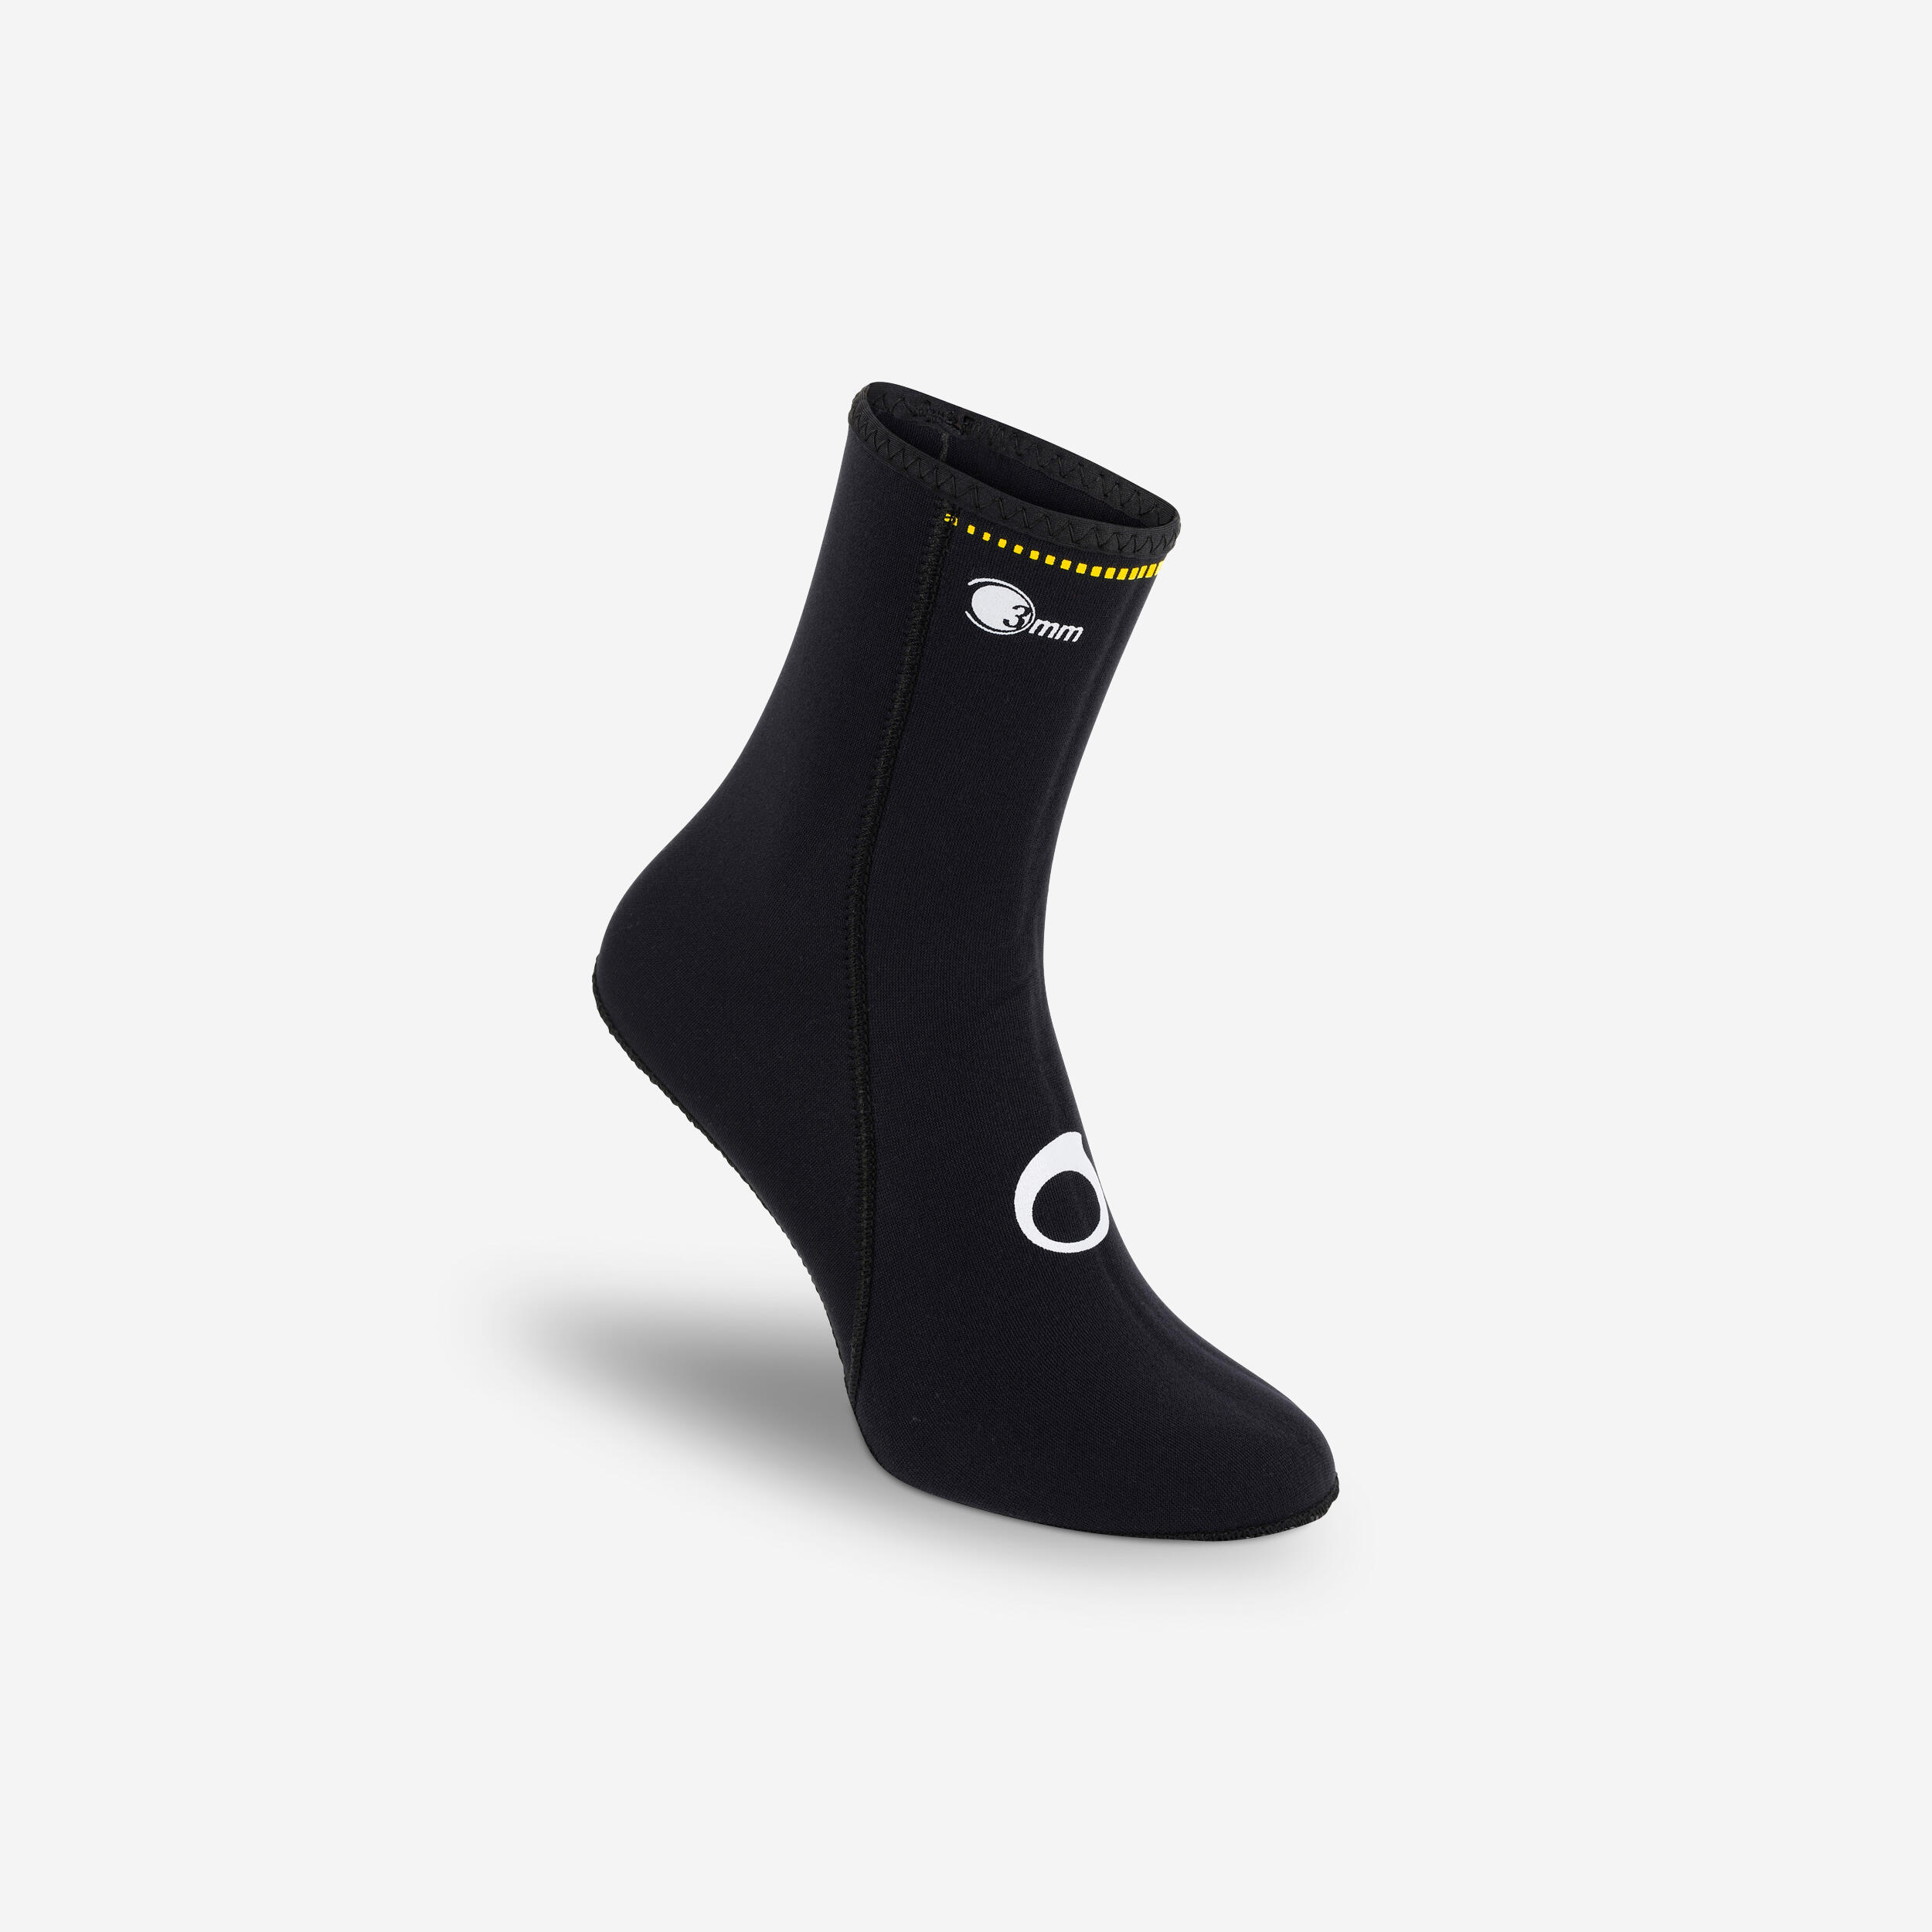 3MM Sportswear Neoprensocken Neoprenhandschuhe Wassersport Tauchen Segeln Socken 